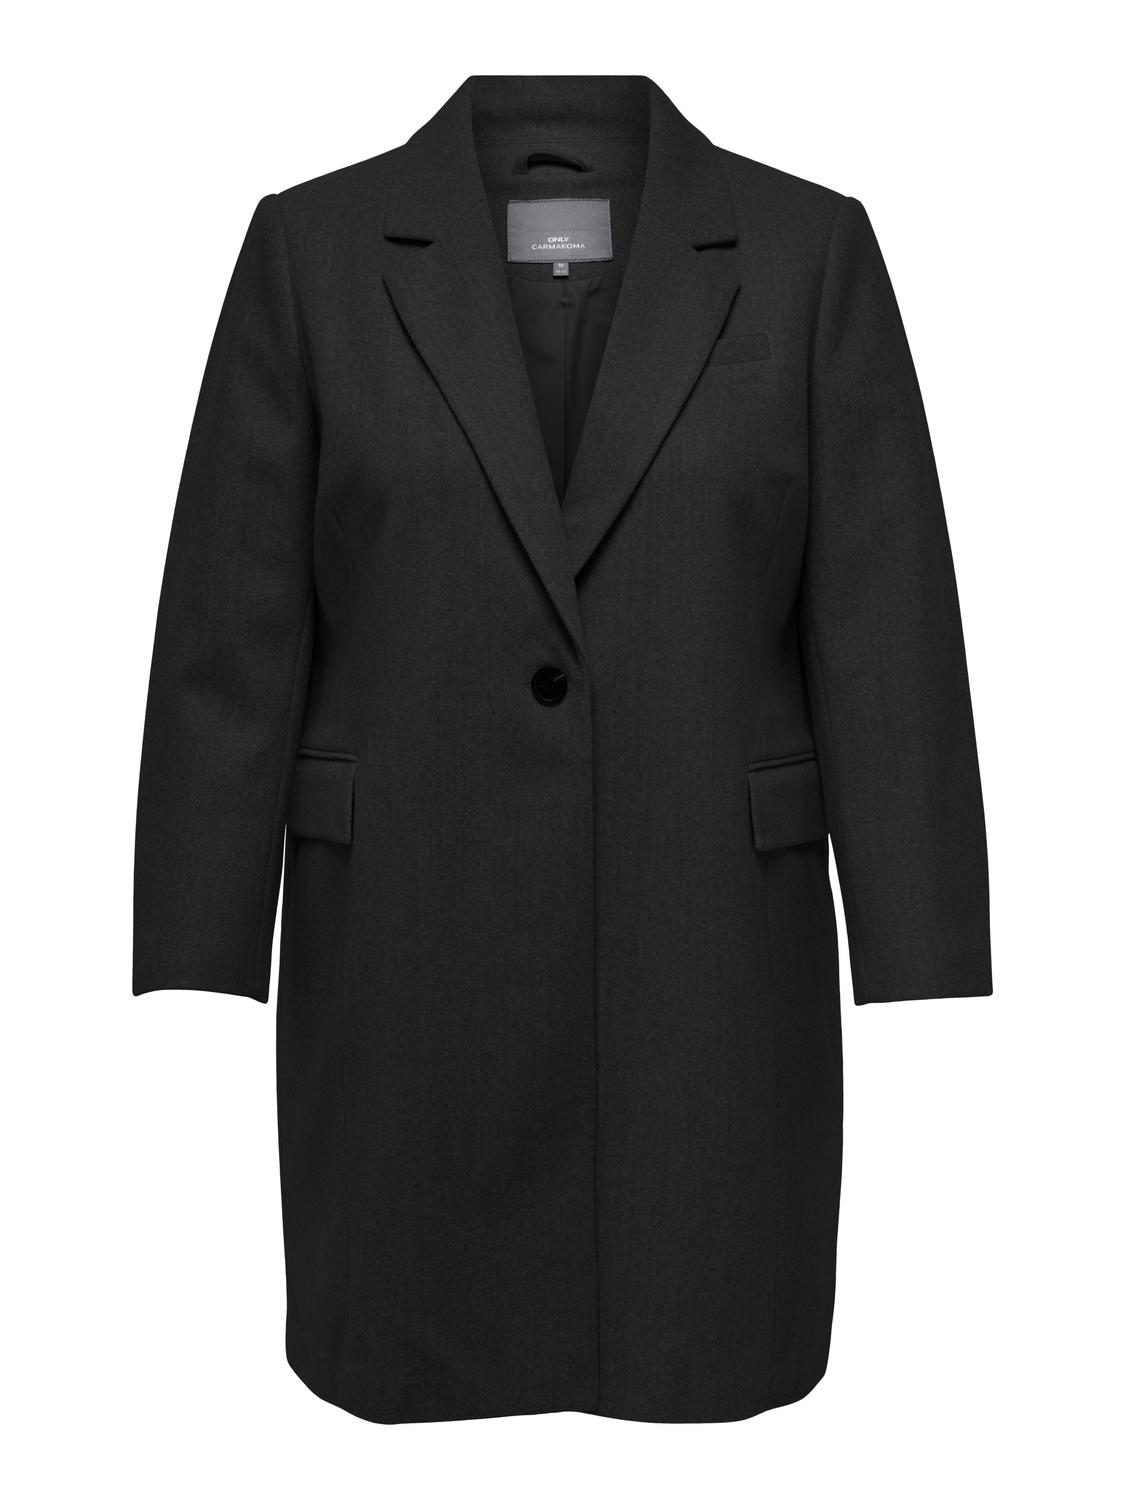 Black | Outerwear COAT by OTW LIFE Carmakoma lene CARNANCY ONLY